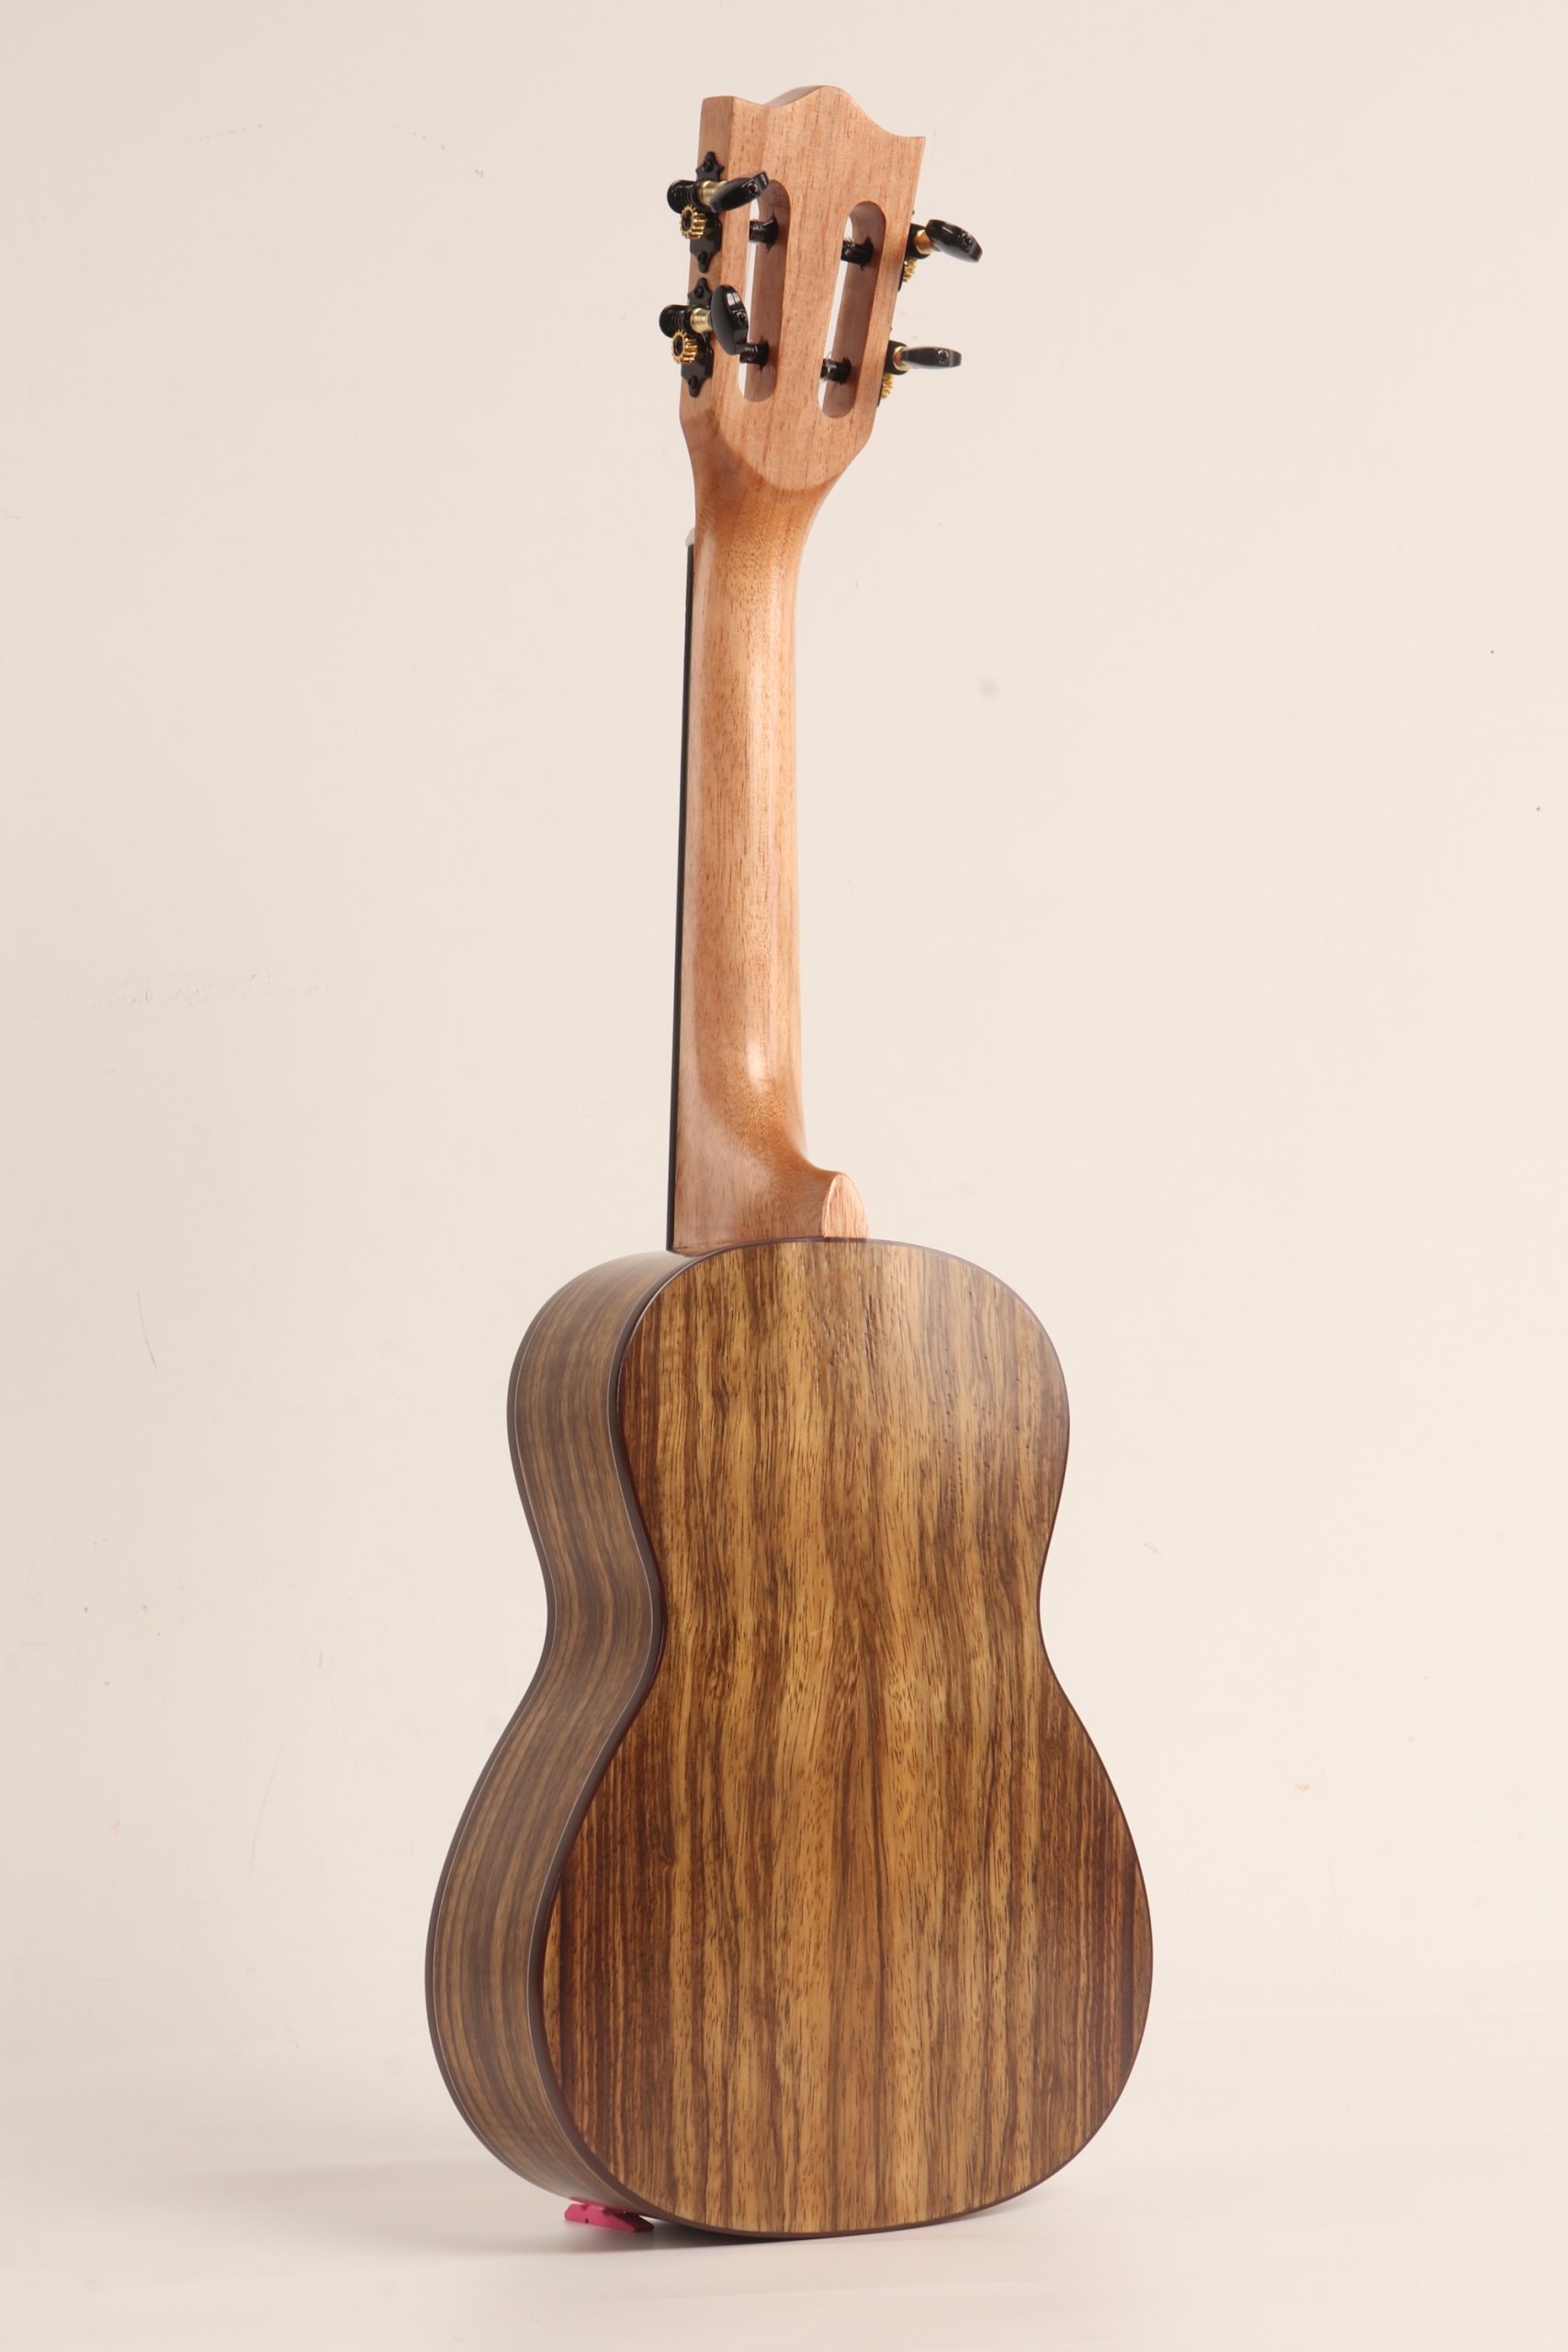 Spalted wood ukulele for OEM